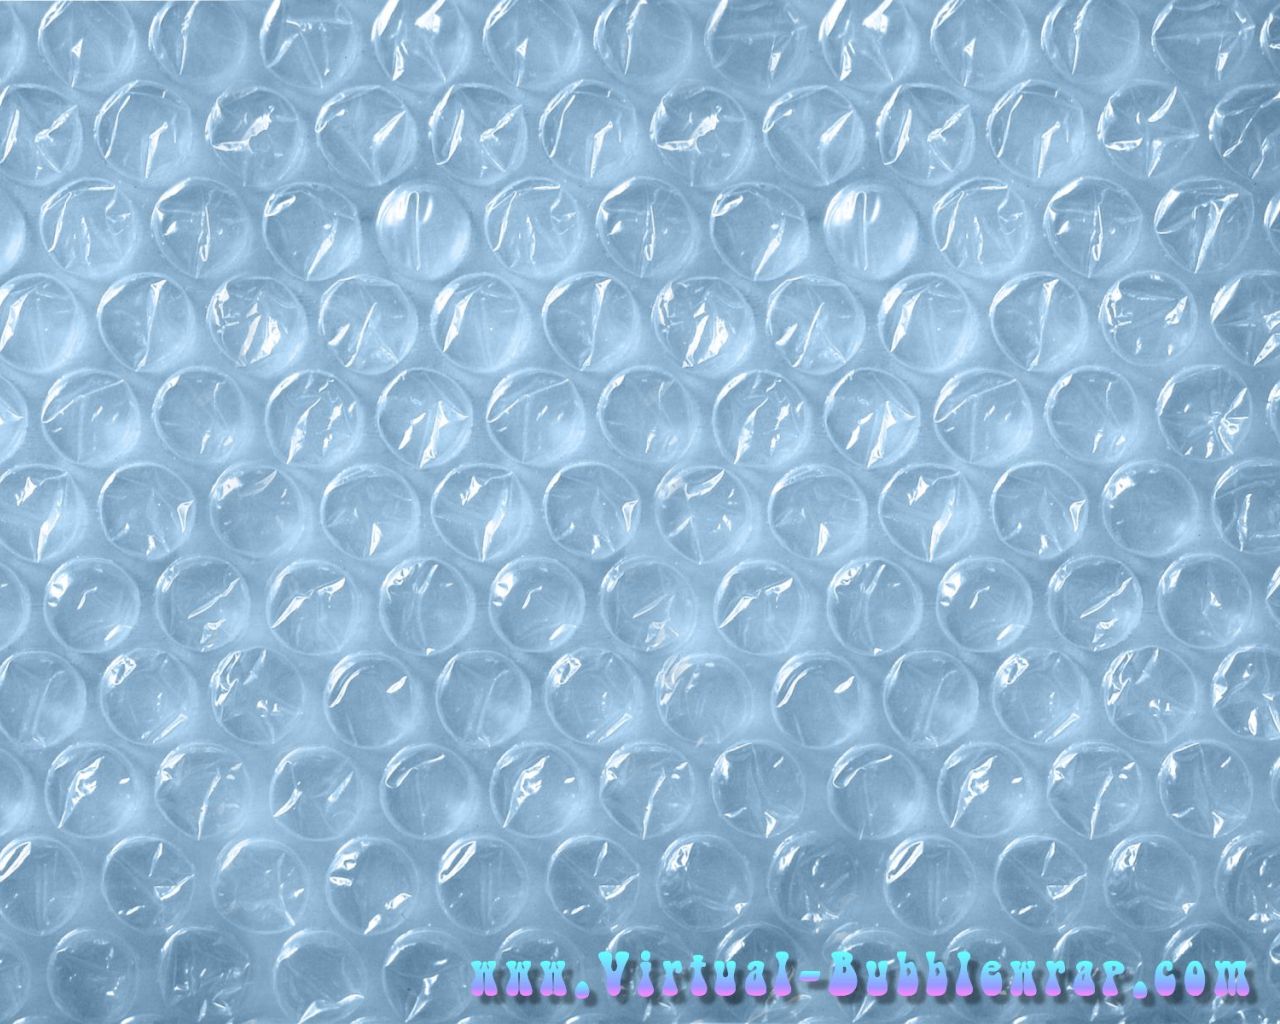 Bubble Pop Game Wallpaper I Like